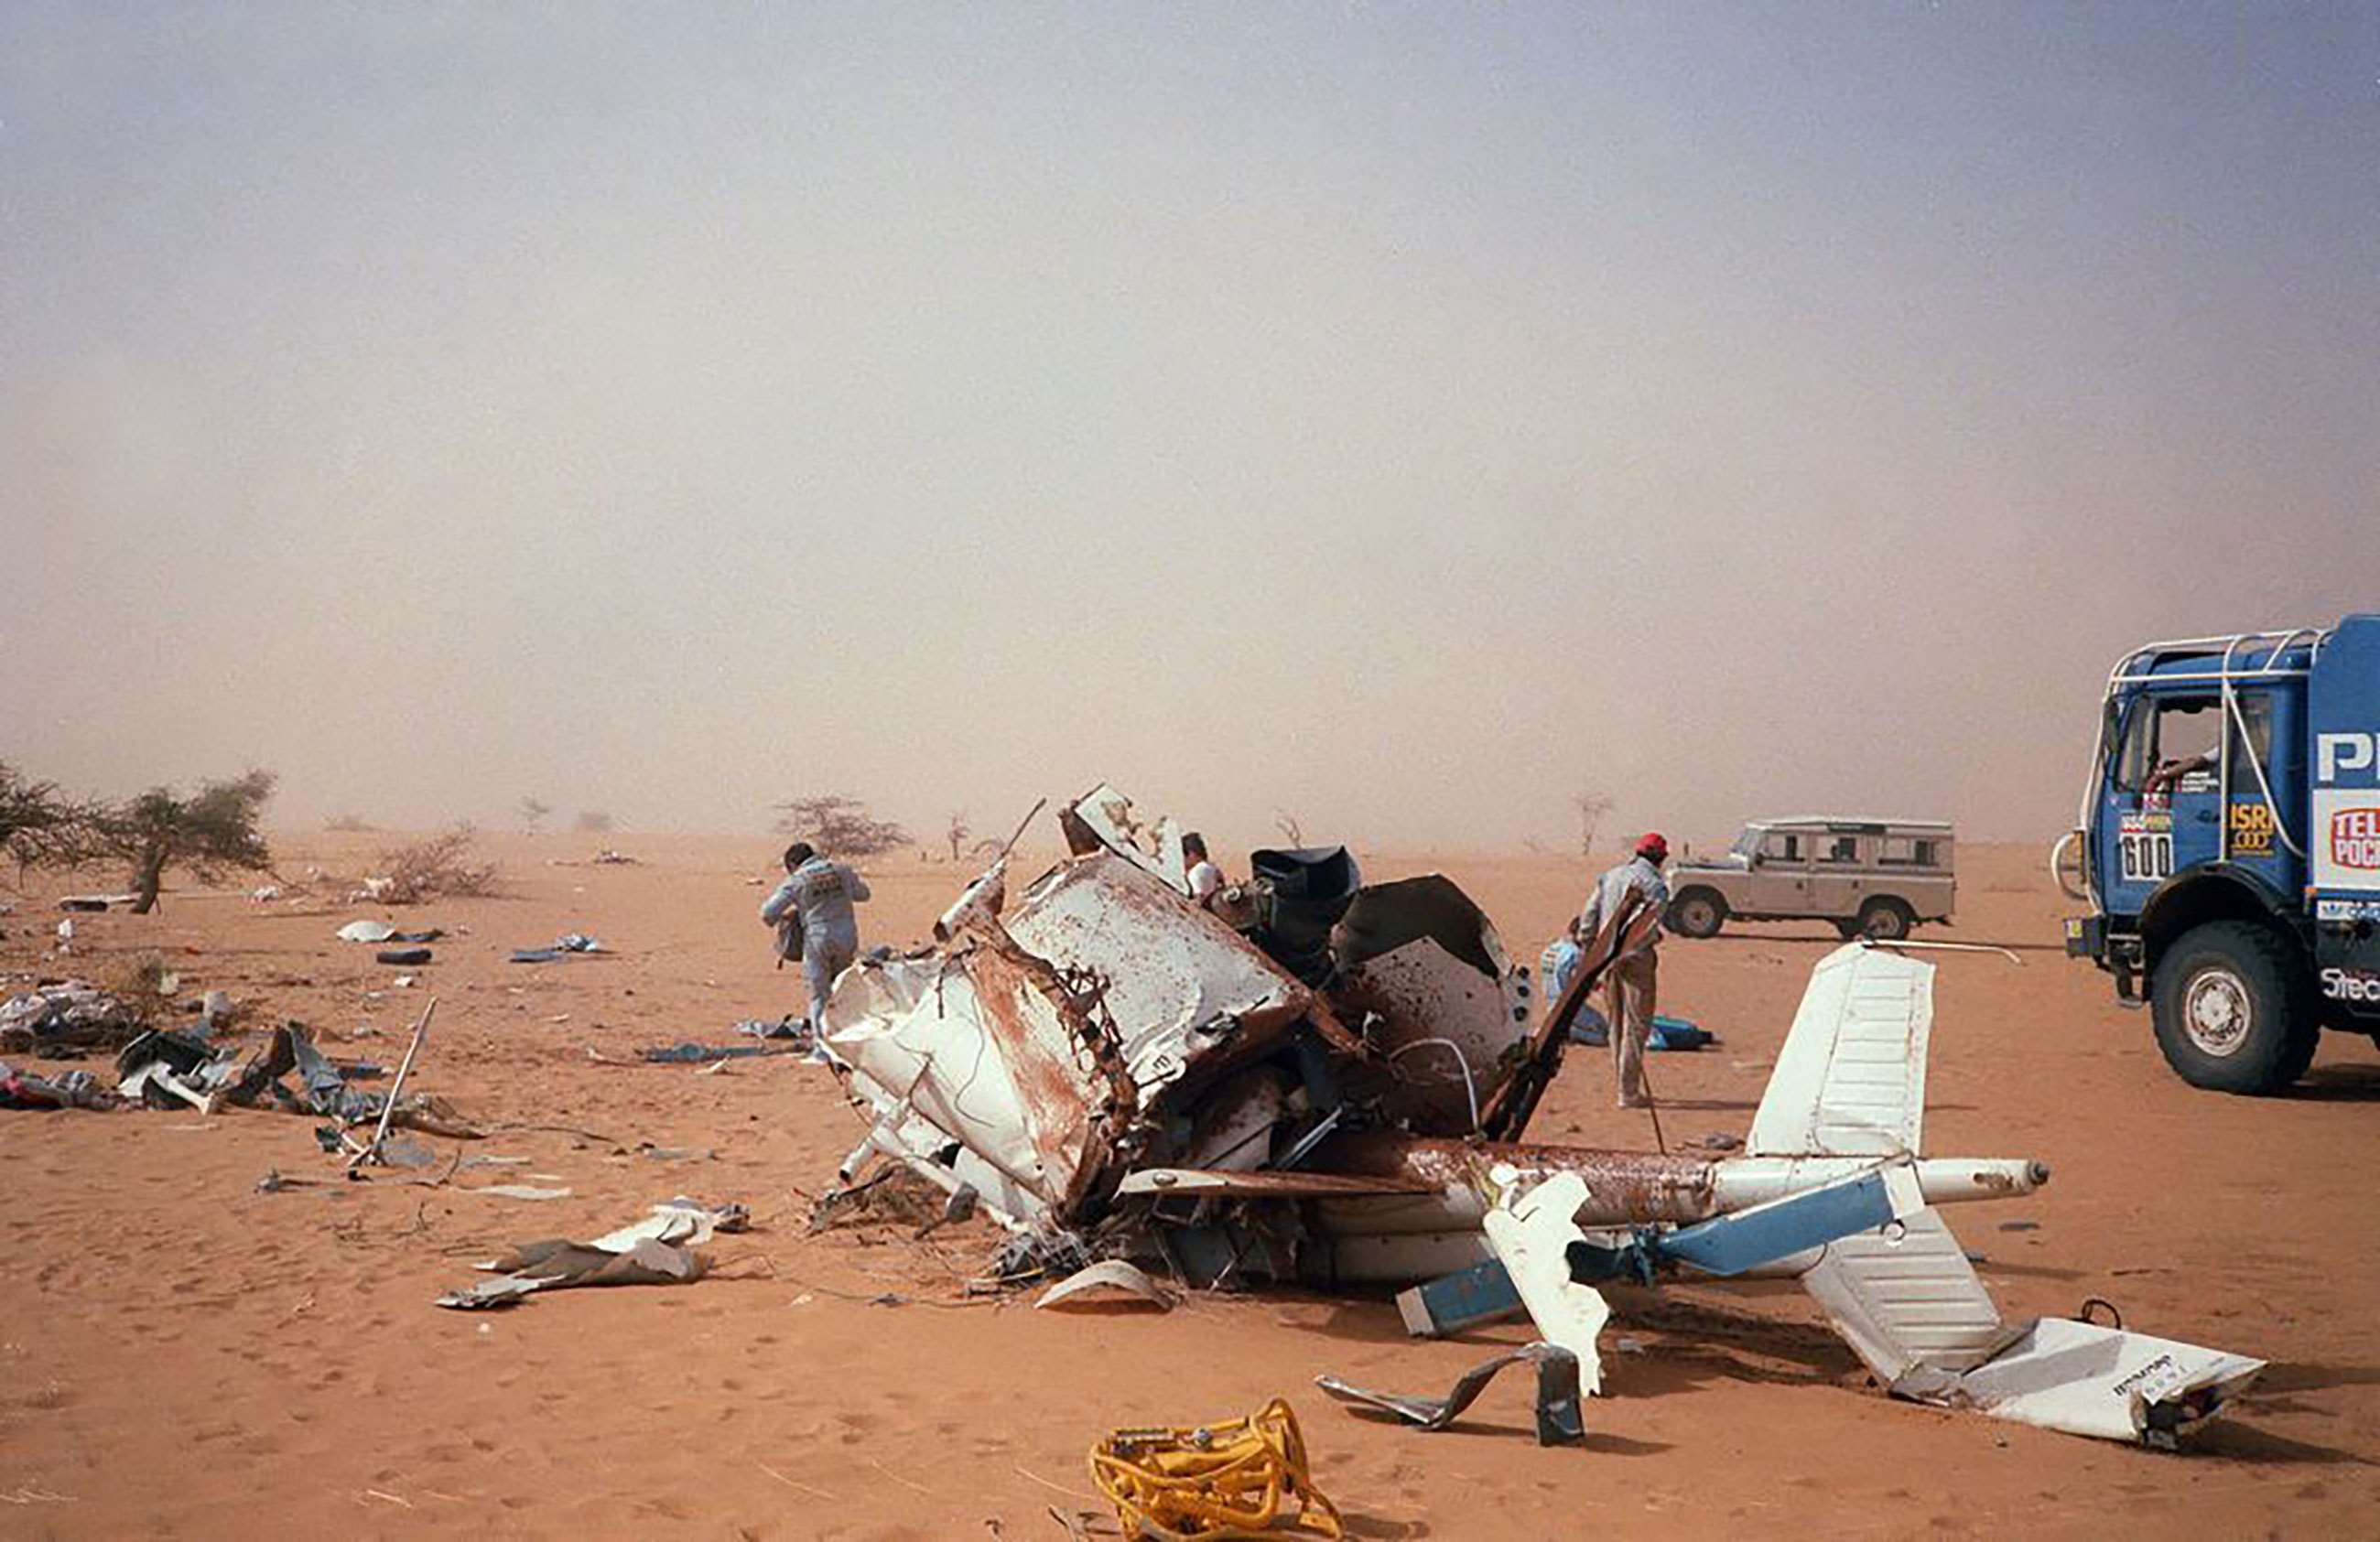 dakar-1986-helicopter-crash-goodwood-07012019.jpg